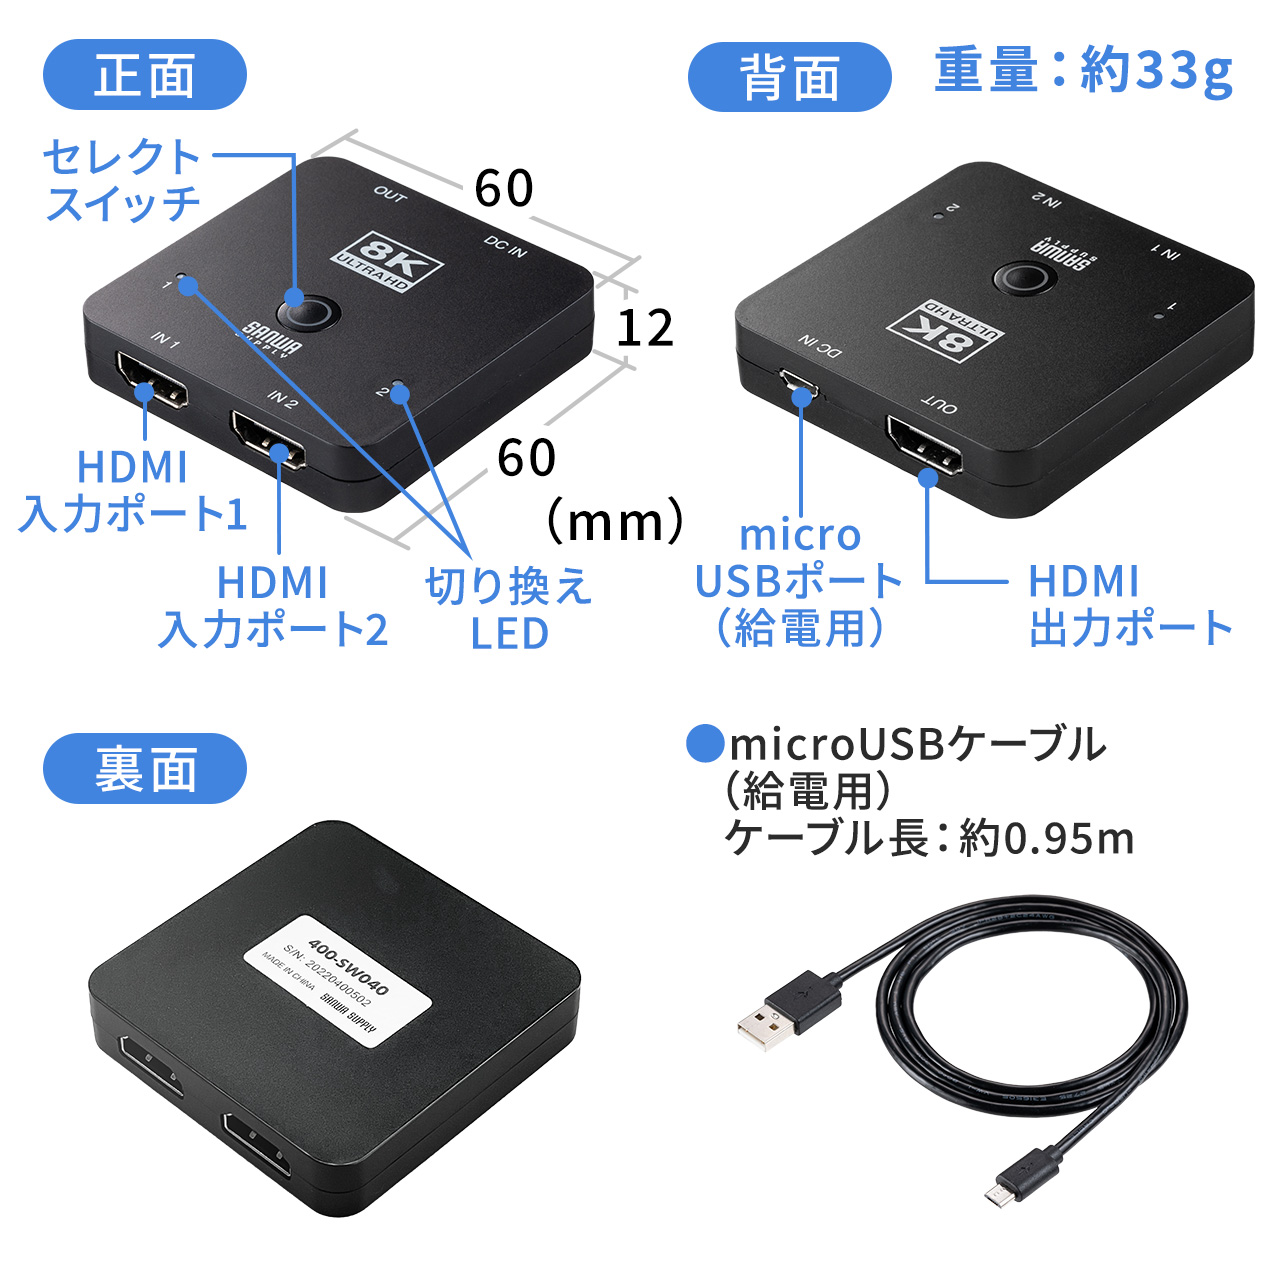 HDMIؑ֊ 21o 4K/120Hz HDRΉ HDCP2.3 /蓮؂ւ HDMIZN^[ PS5mFς 400-SW040